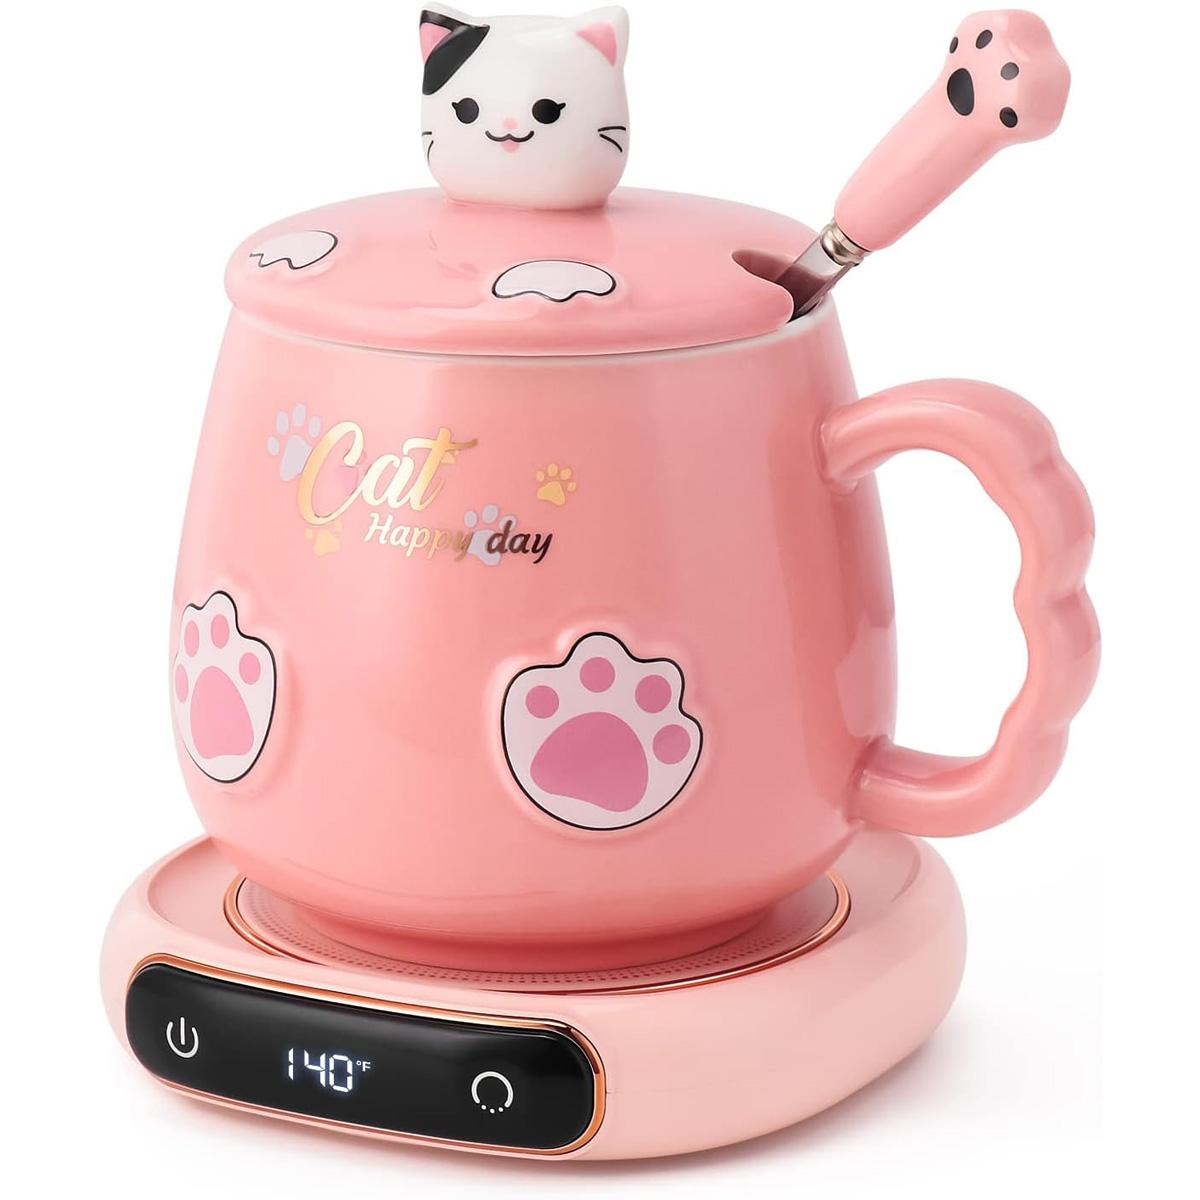 Coffee Mug Warmer and Cute Cat Mug Set by Bgbg for $14.99 Shipped